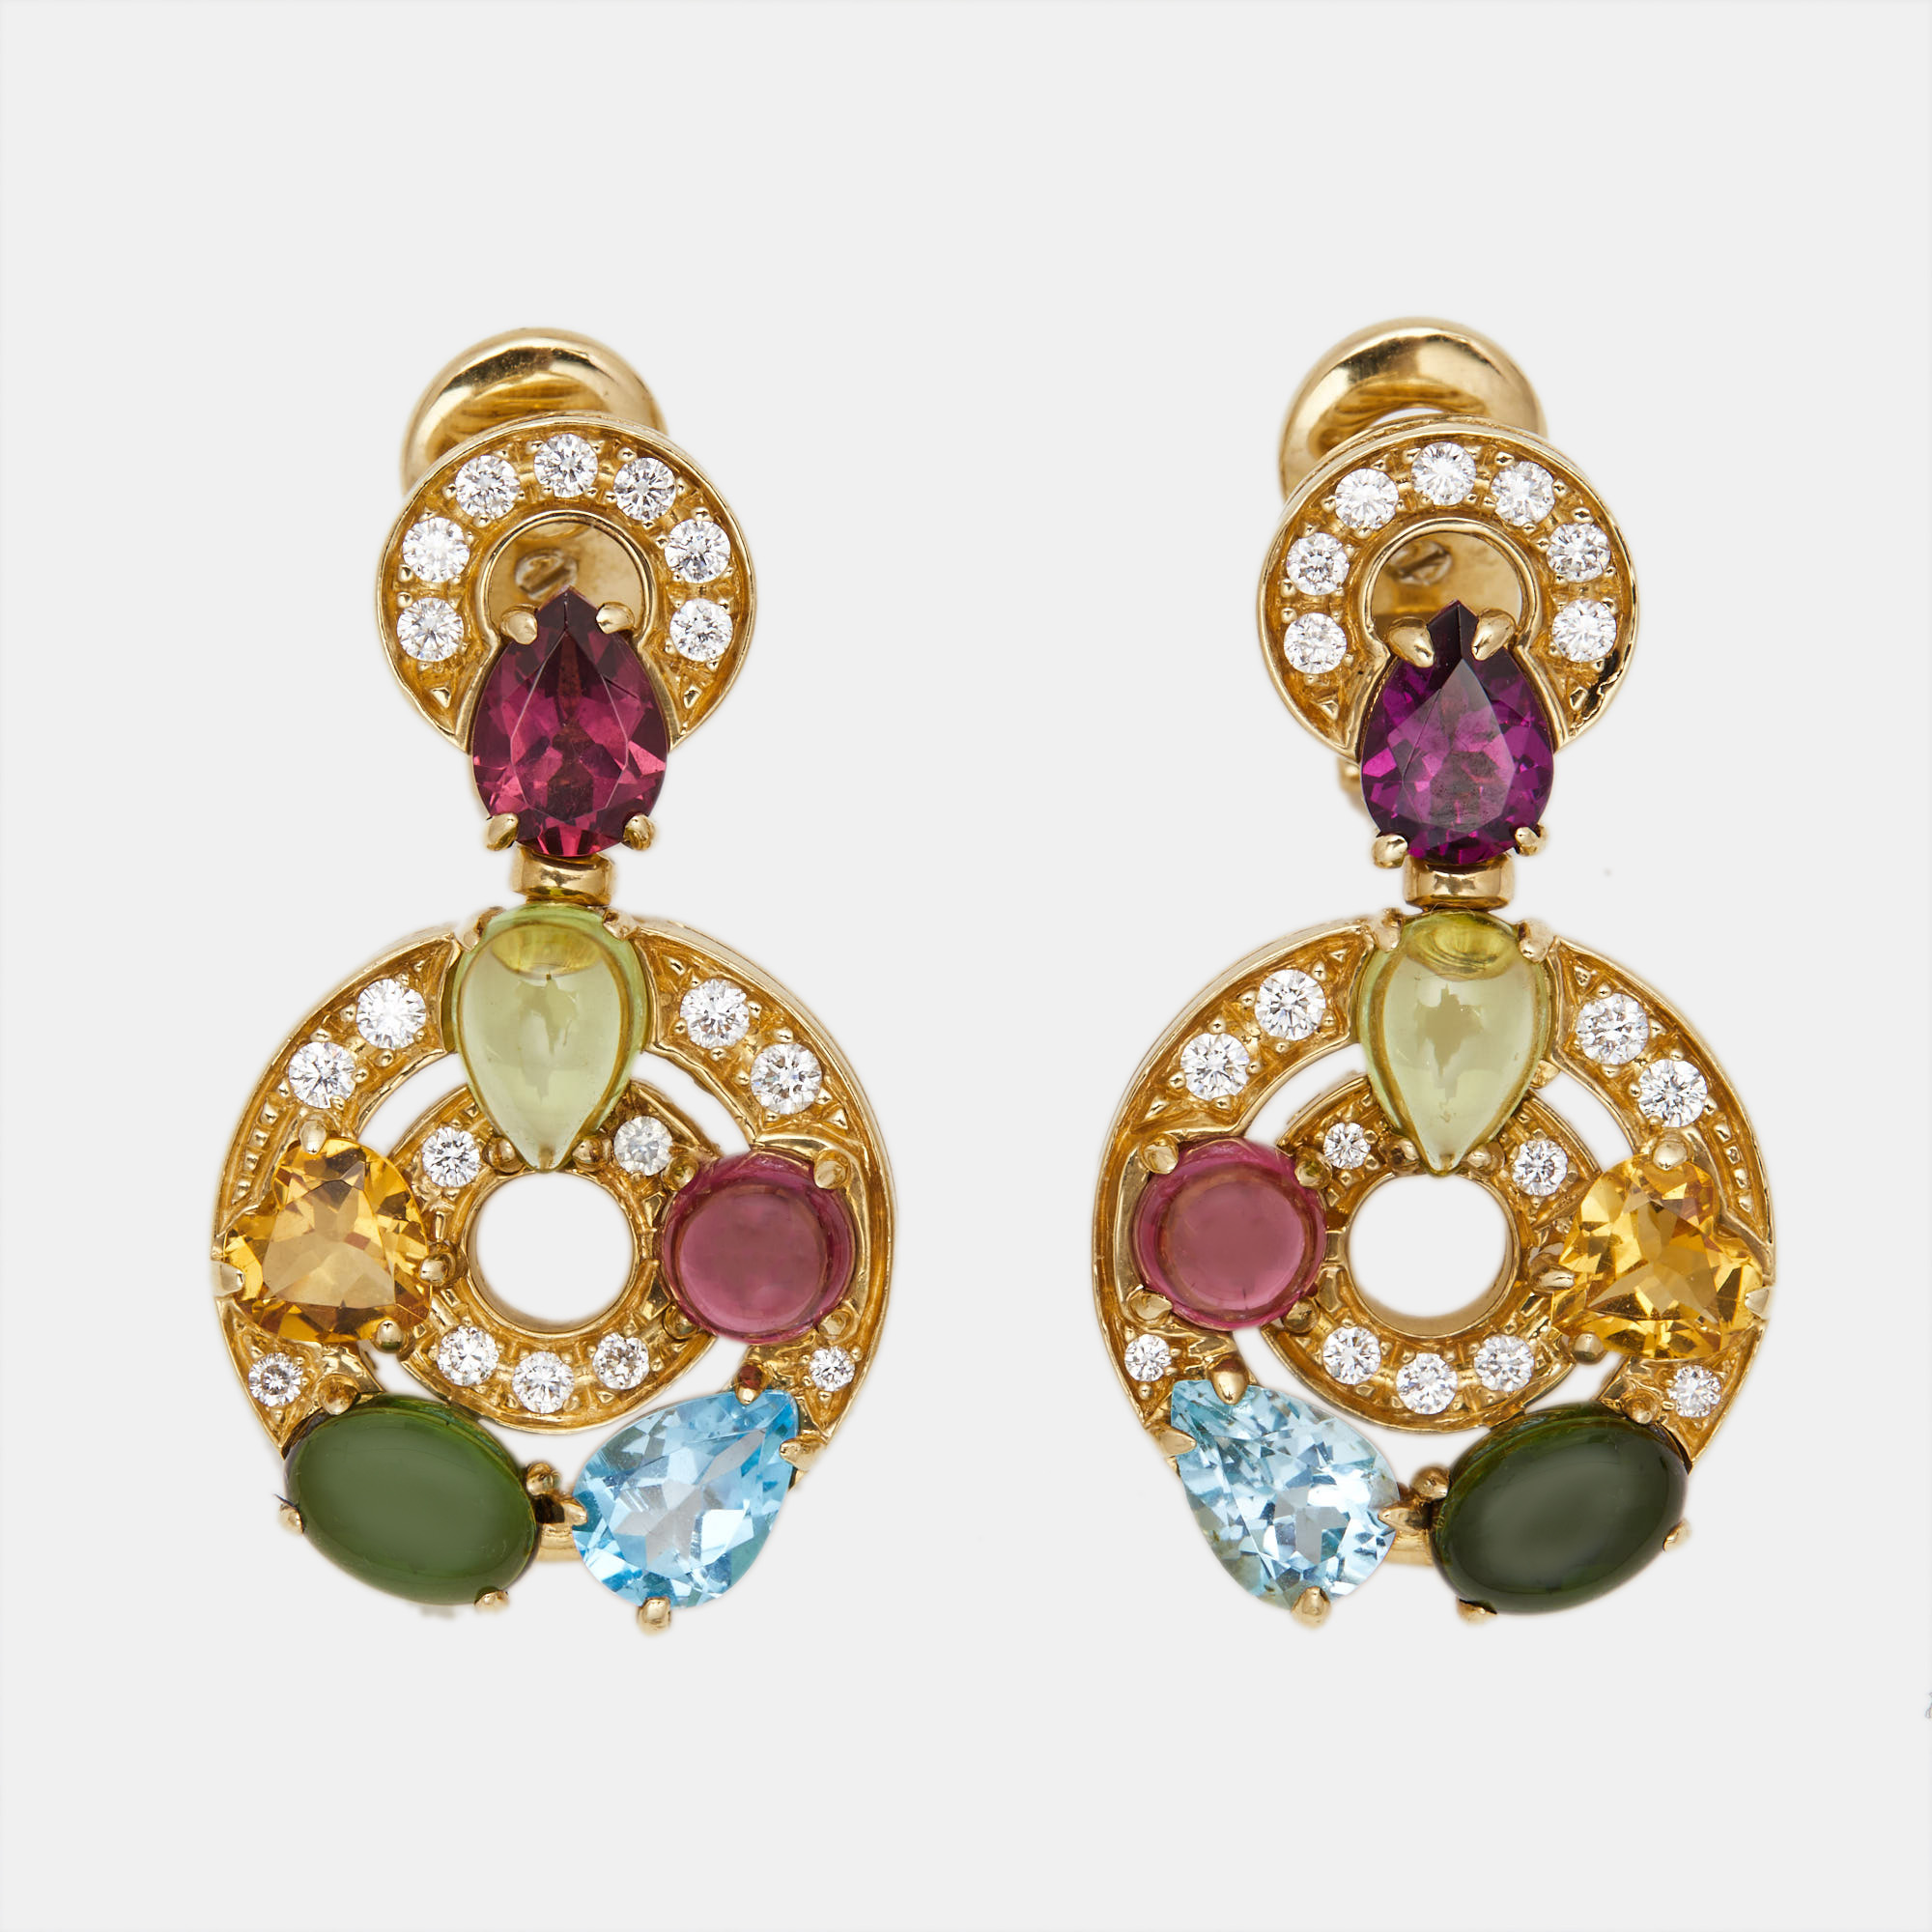 Bvlgari Cerchi Multi Gemstones 18k Yellow Gold Earrings